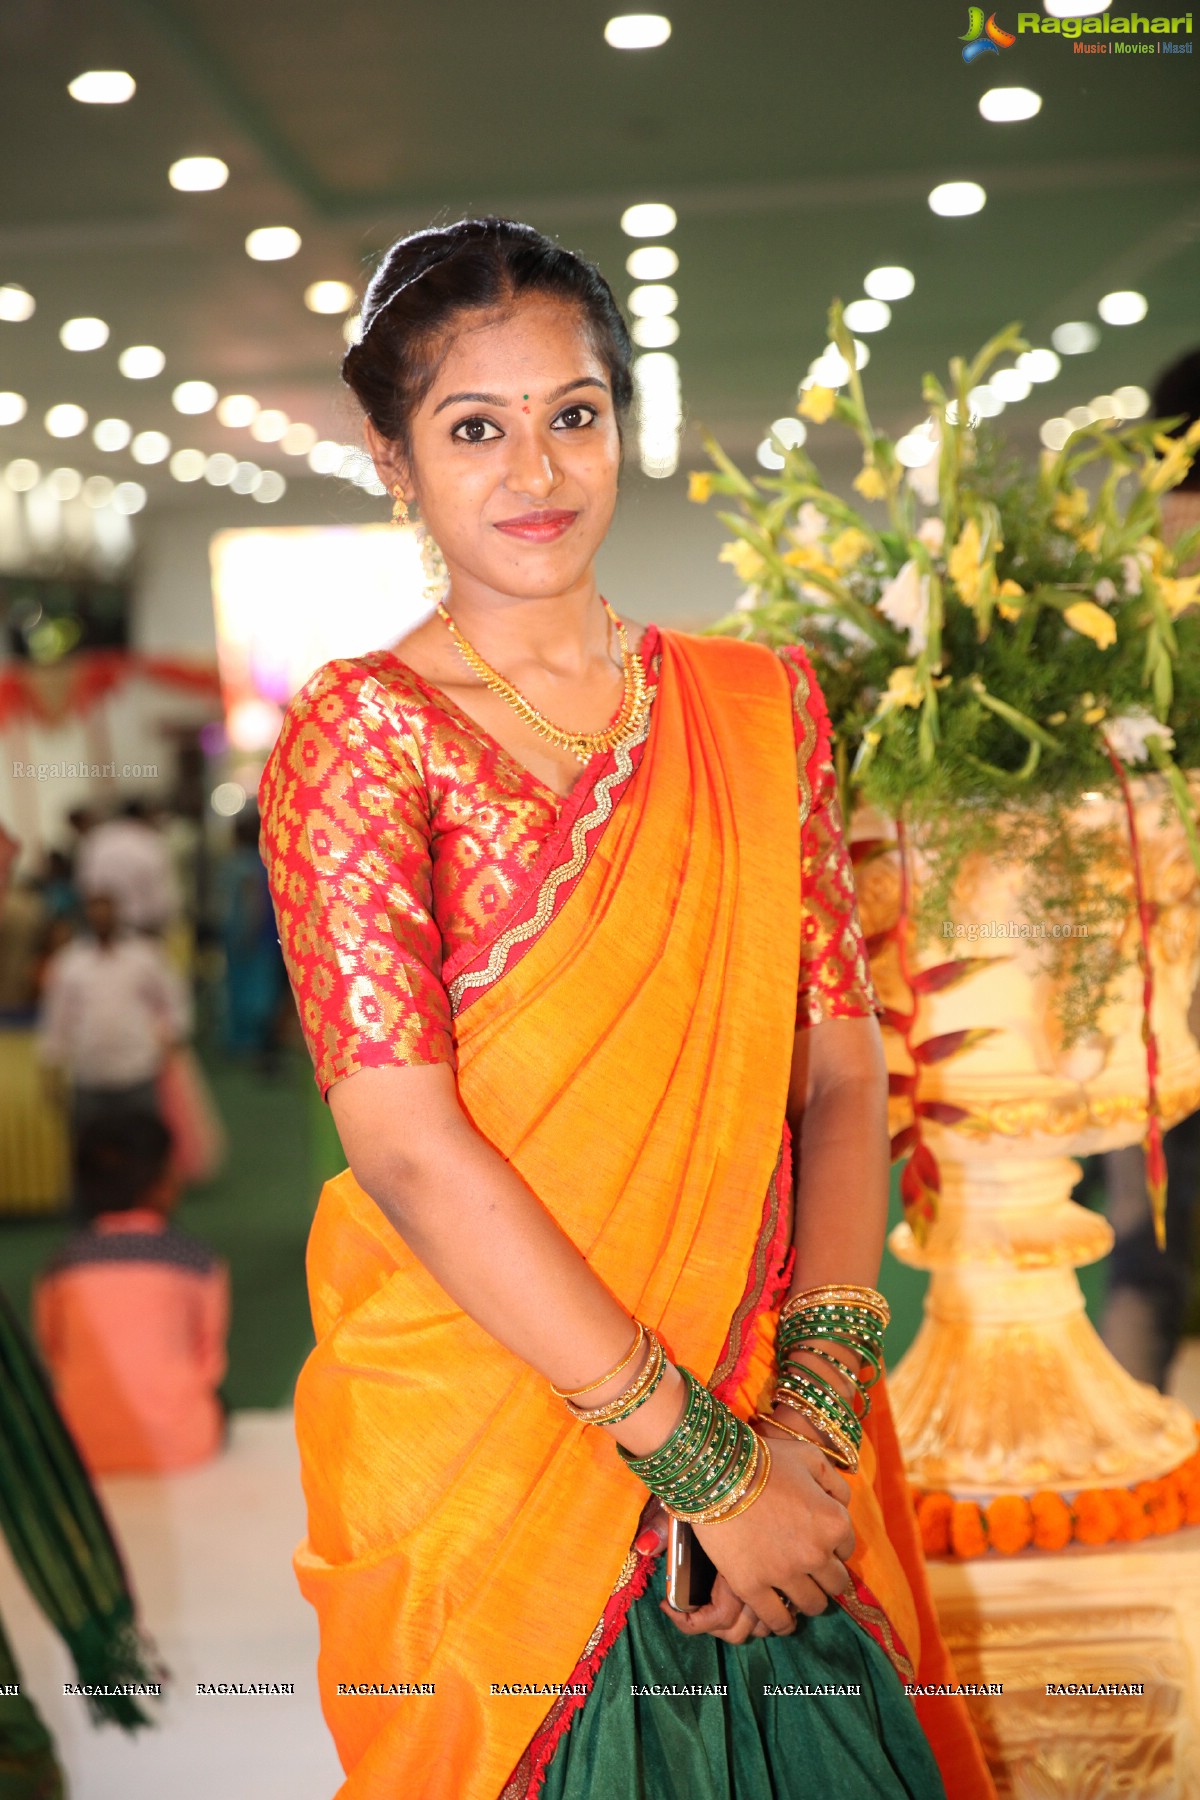 Vanaja Weds Mahendar Yadav at Image Gardens, Madhapur, Hyderabad